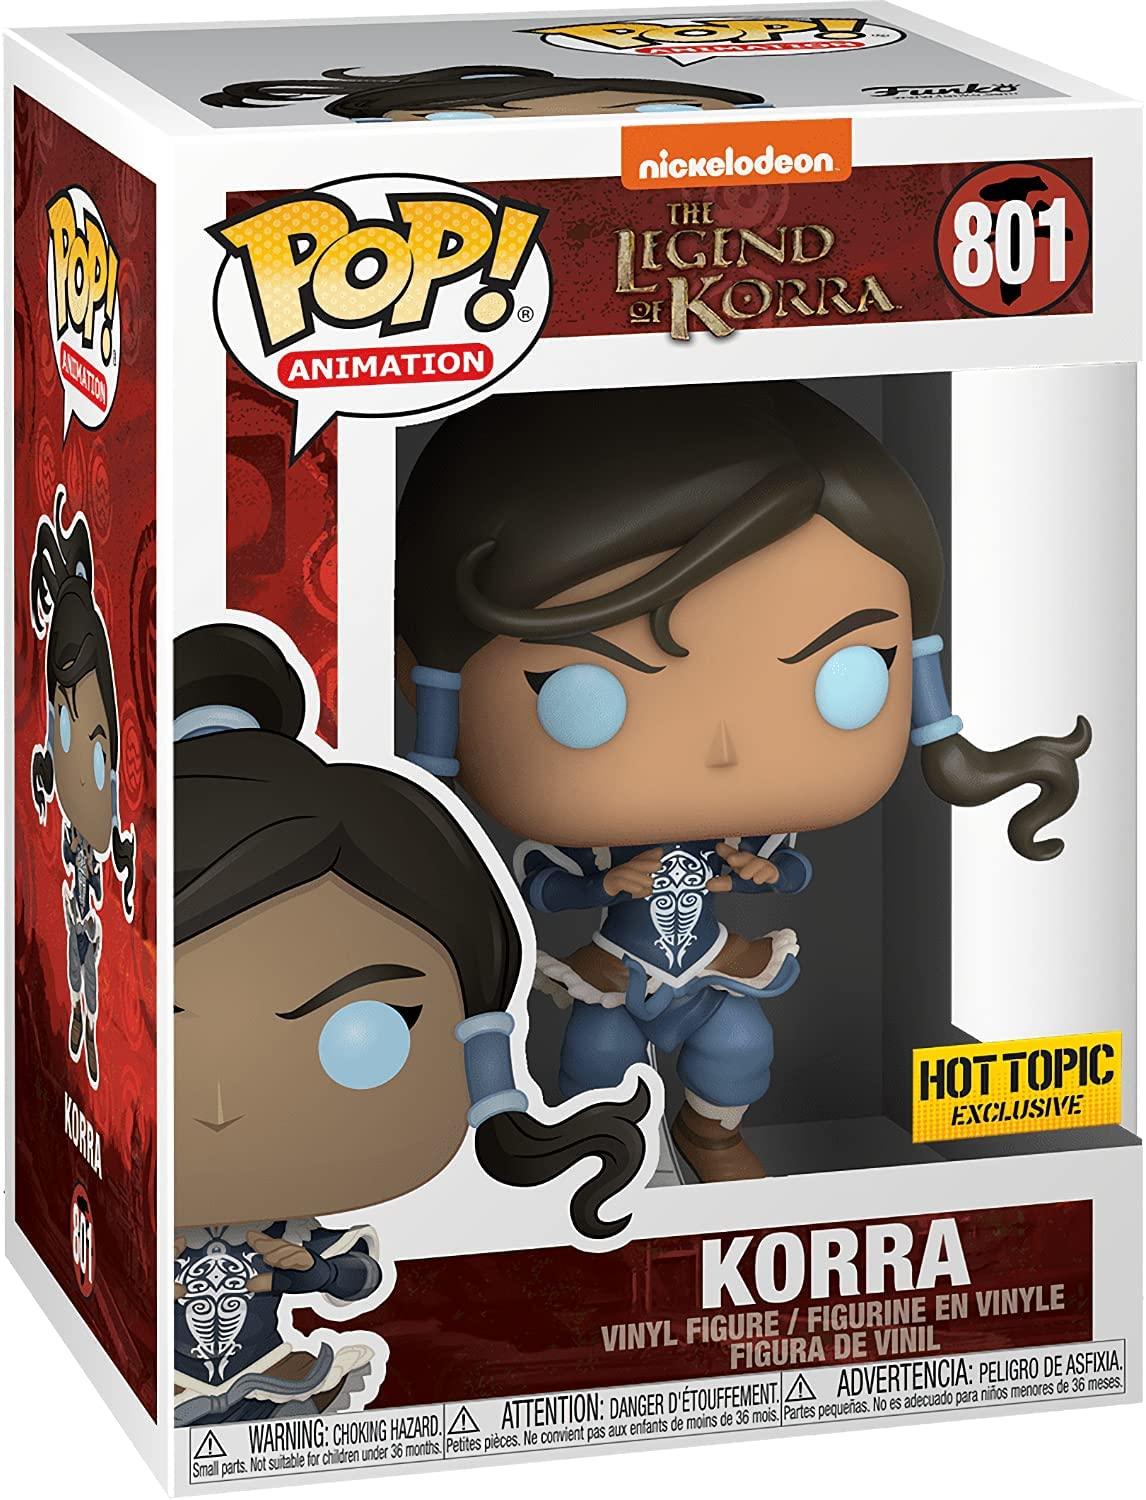 Pop! Animation - The Legend Of Korra - Korra - #801 - Hot Topic EXCLUSIVE - Hobby Champion Inc